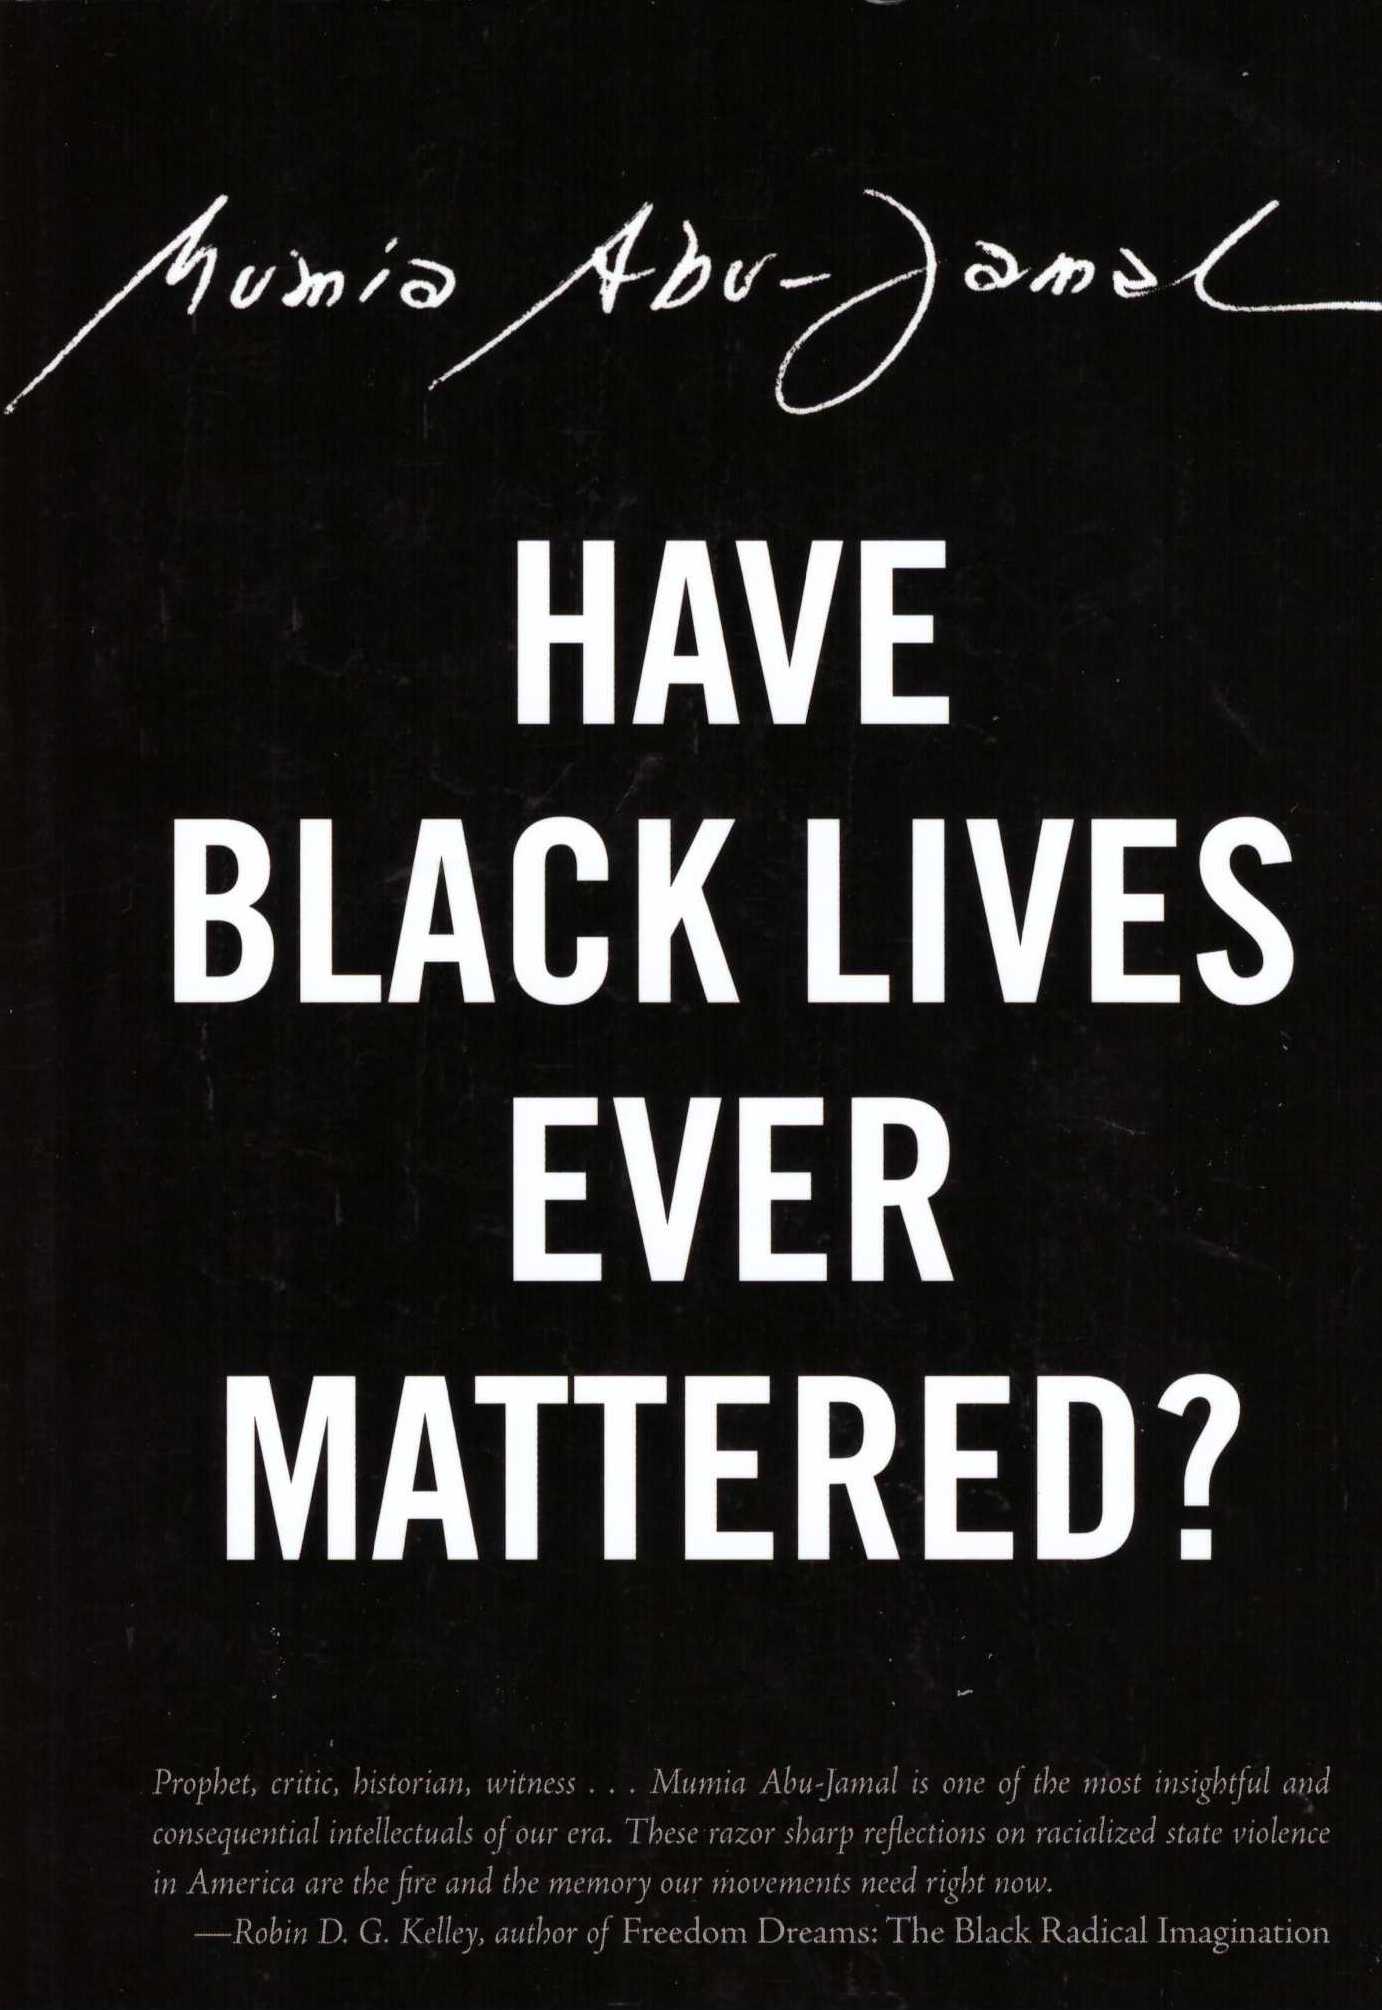 ABU-JAMAL, Mumia - Have Black Lives Ever Mattered?